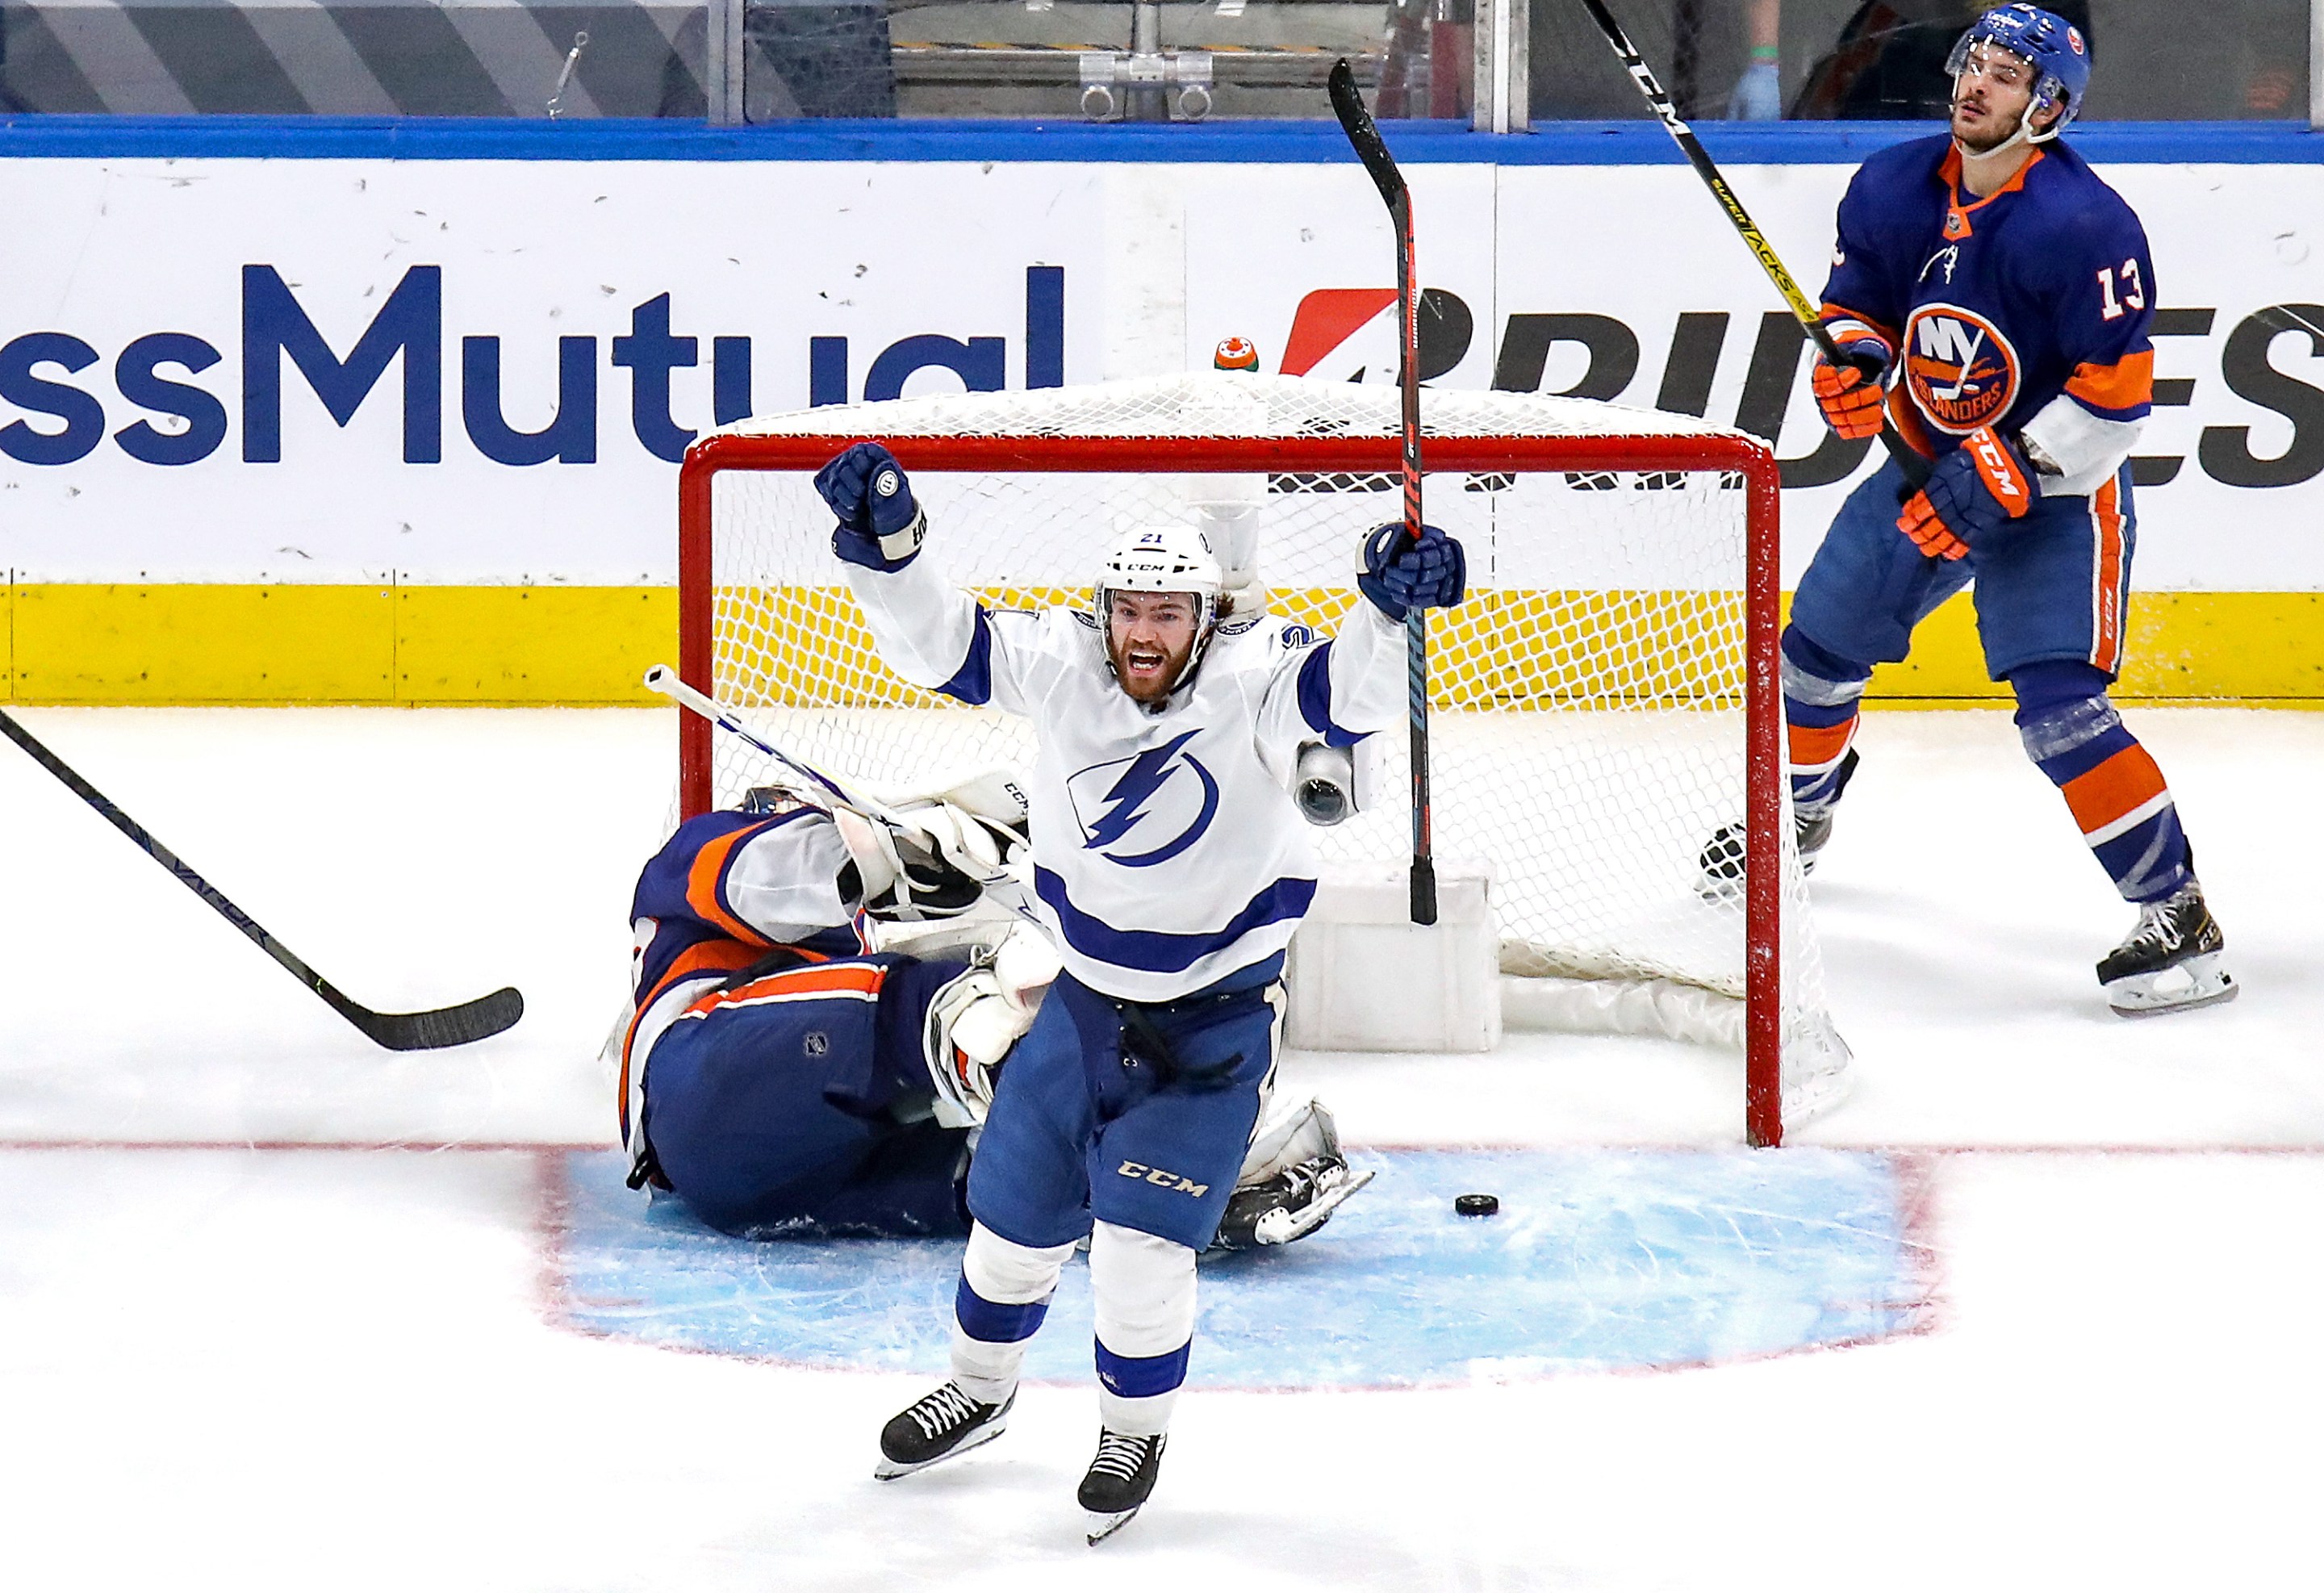 Brayden Point of the Tampa Bay Lightning celebrates after scoring a goal past Semyon Varlamov of the New York Islanders